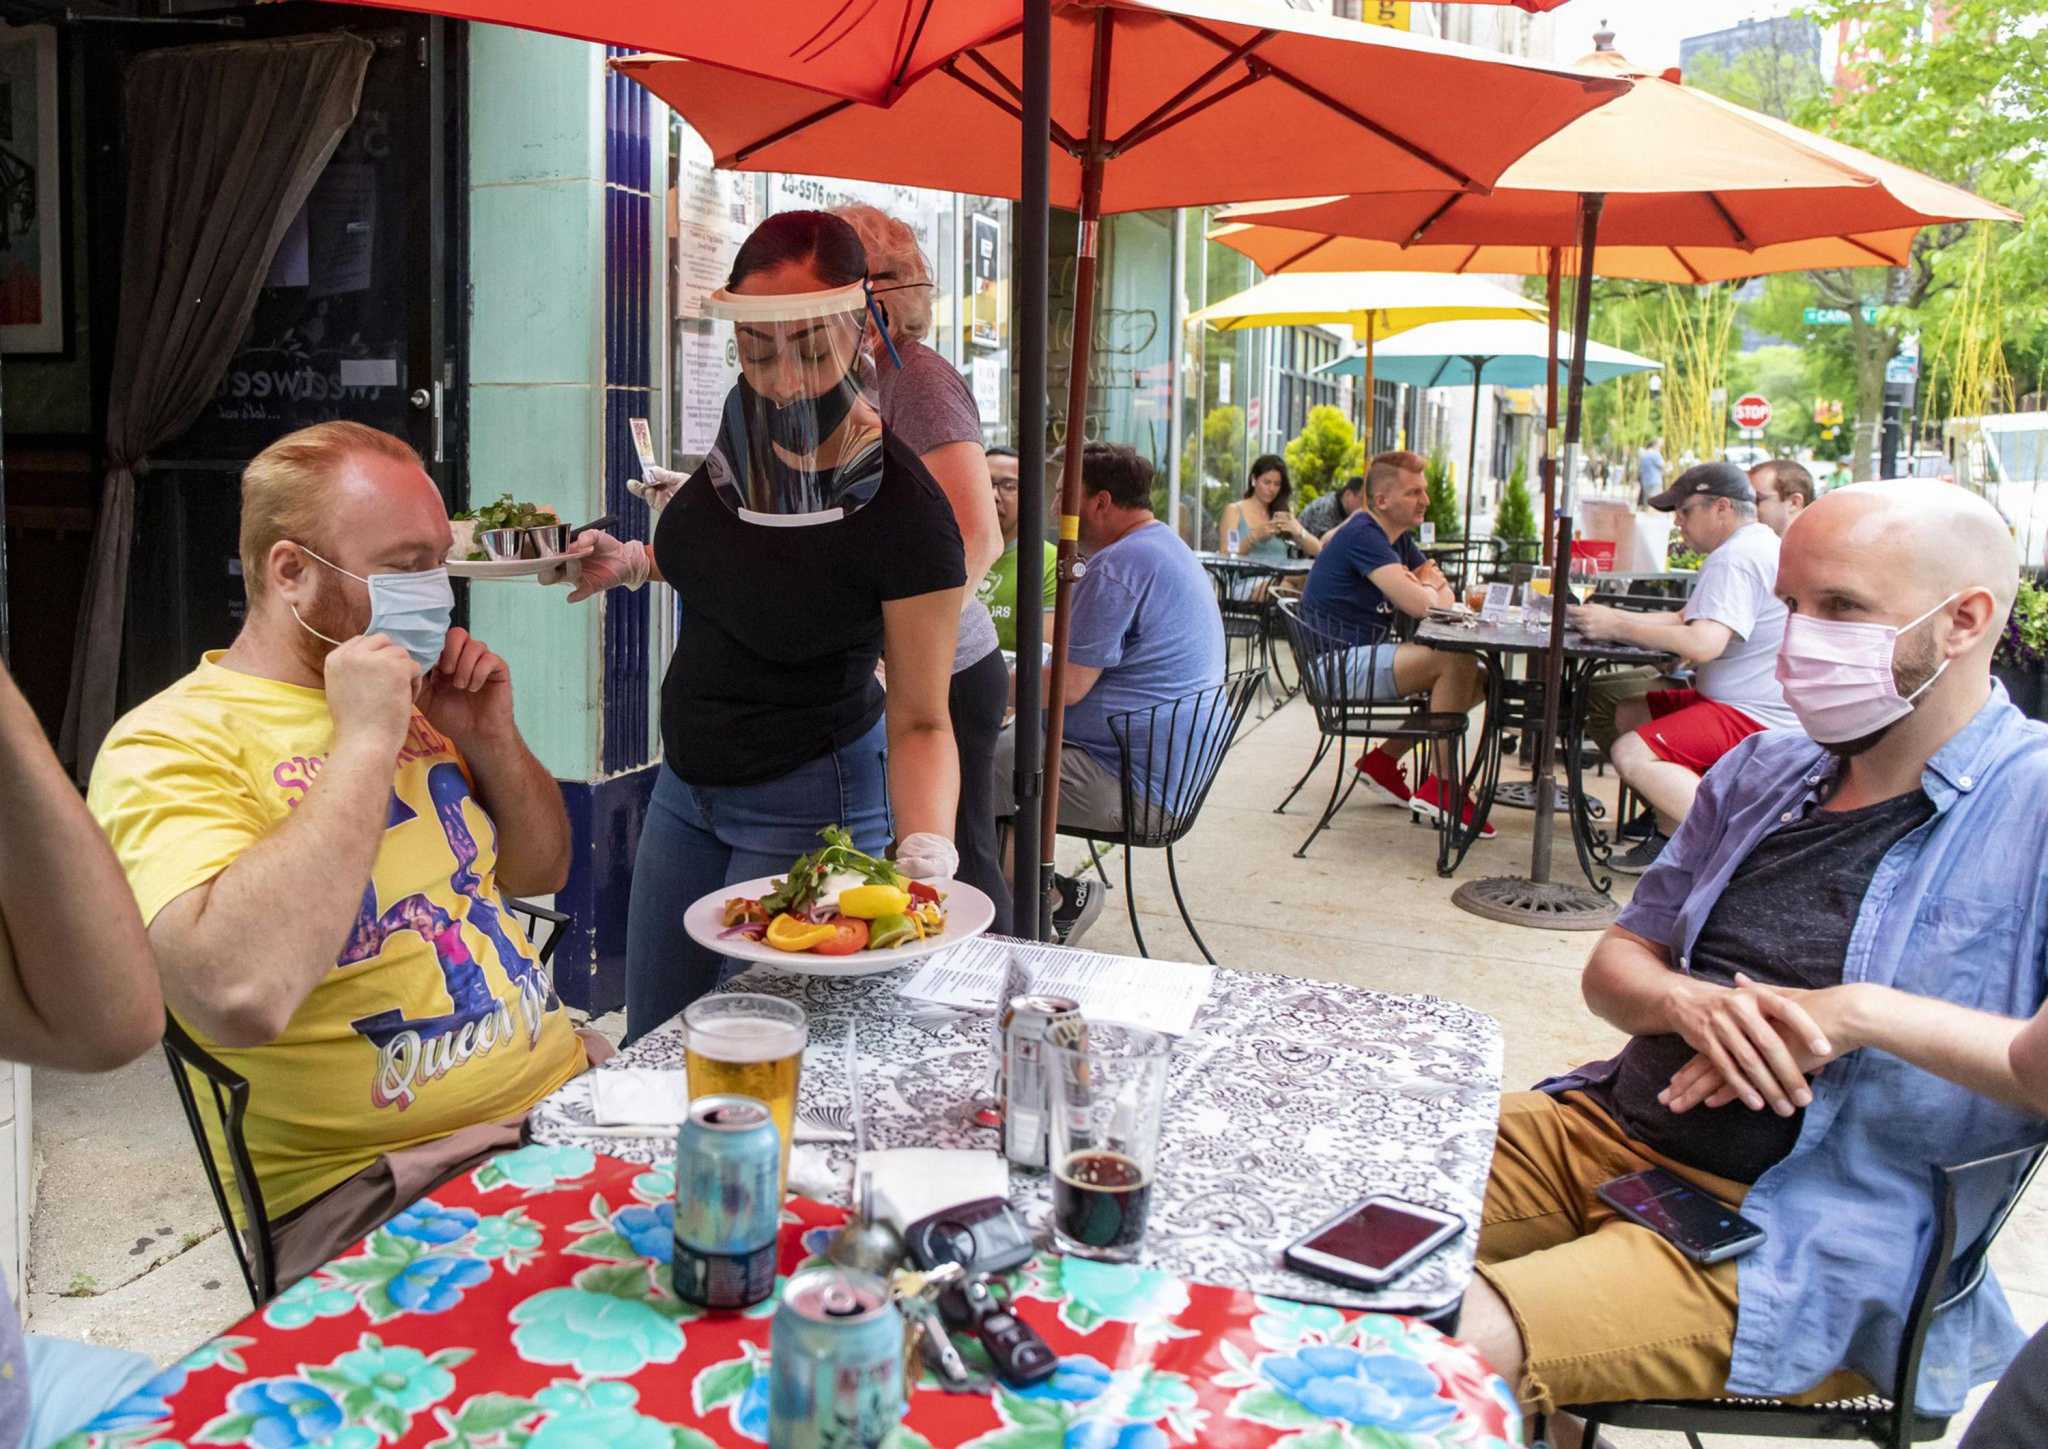 Analysis: Eating outside at restaurants may be risky